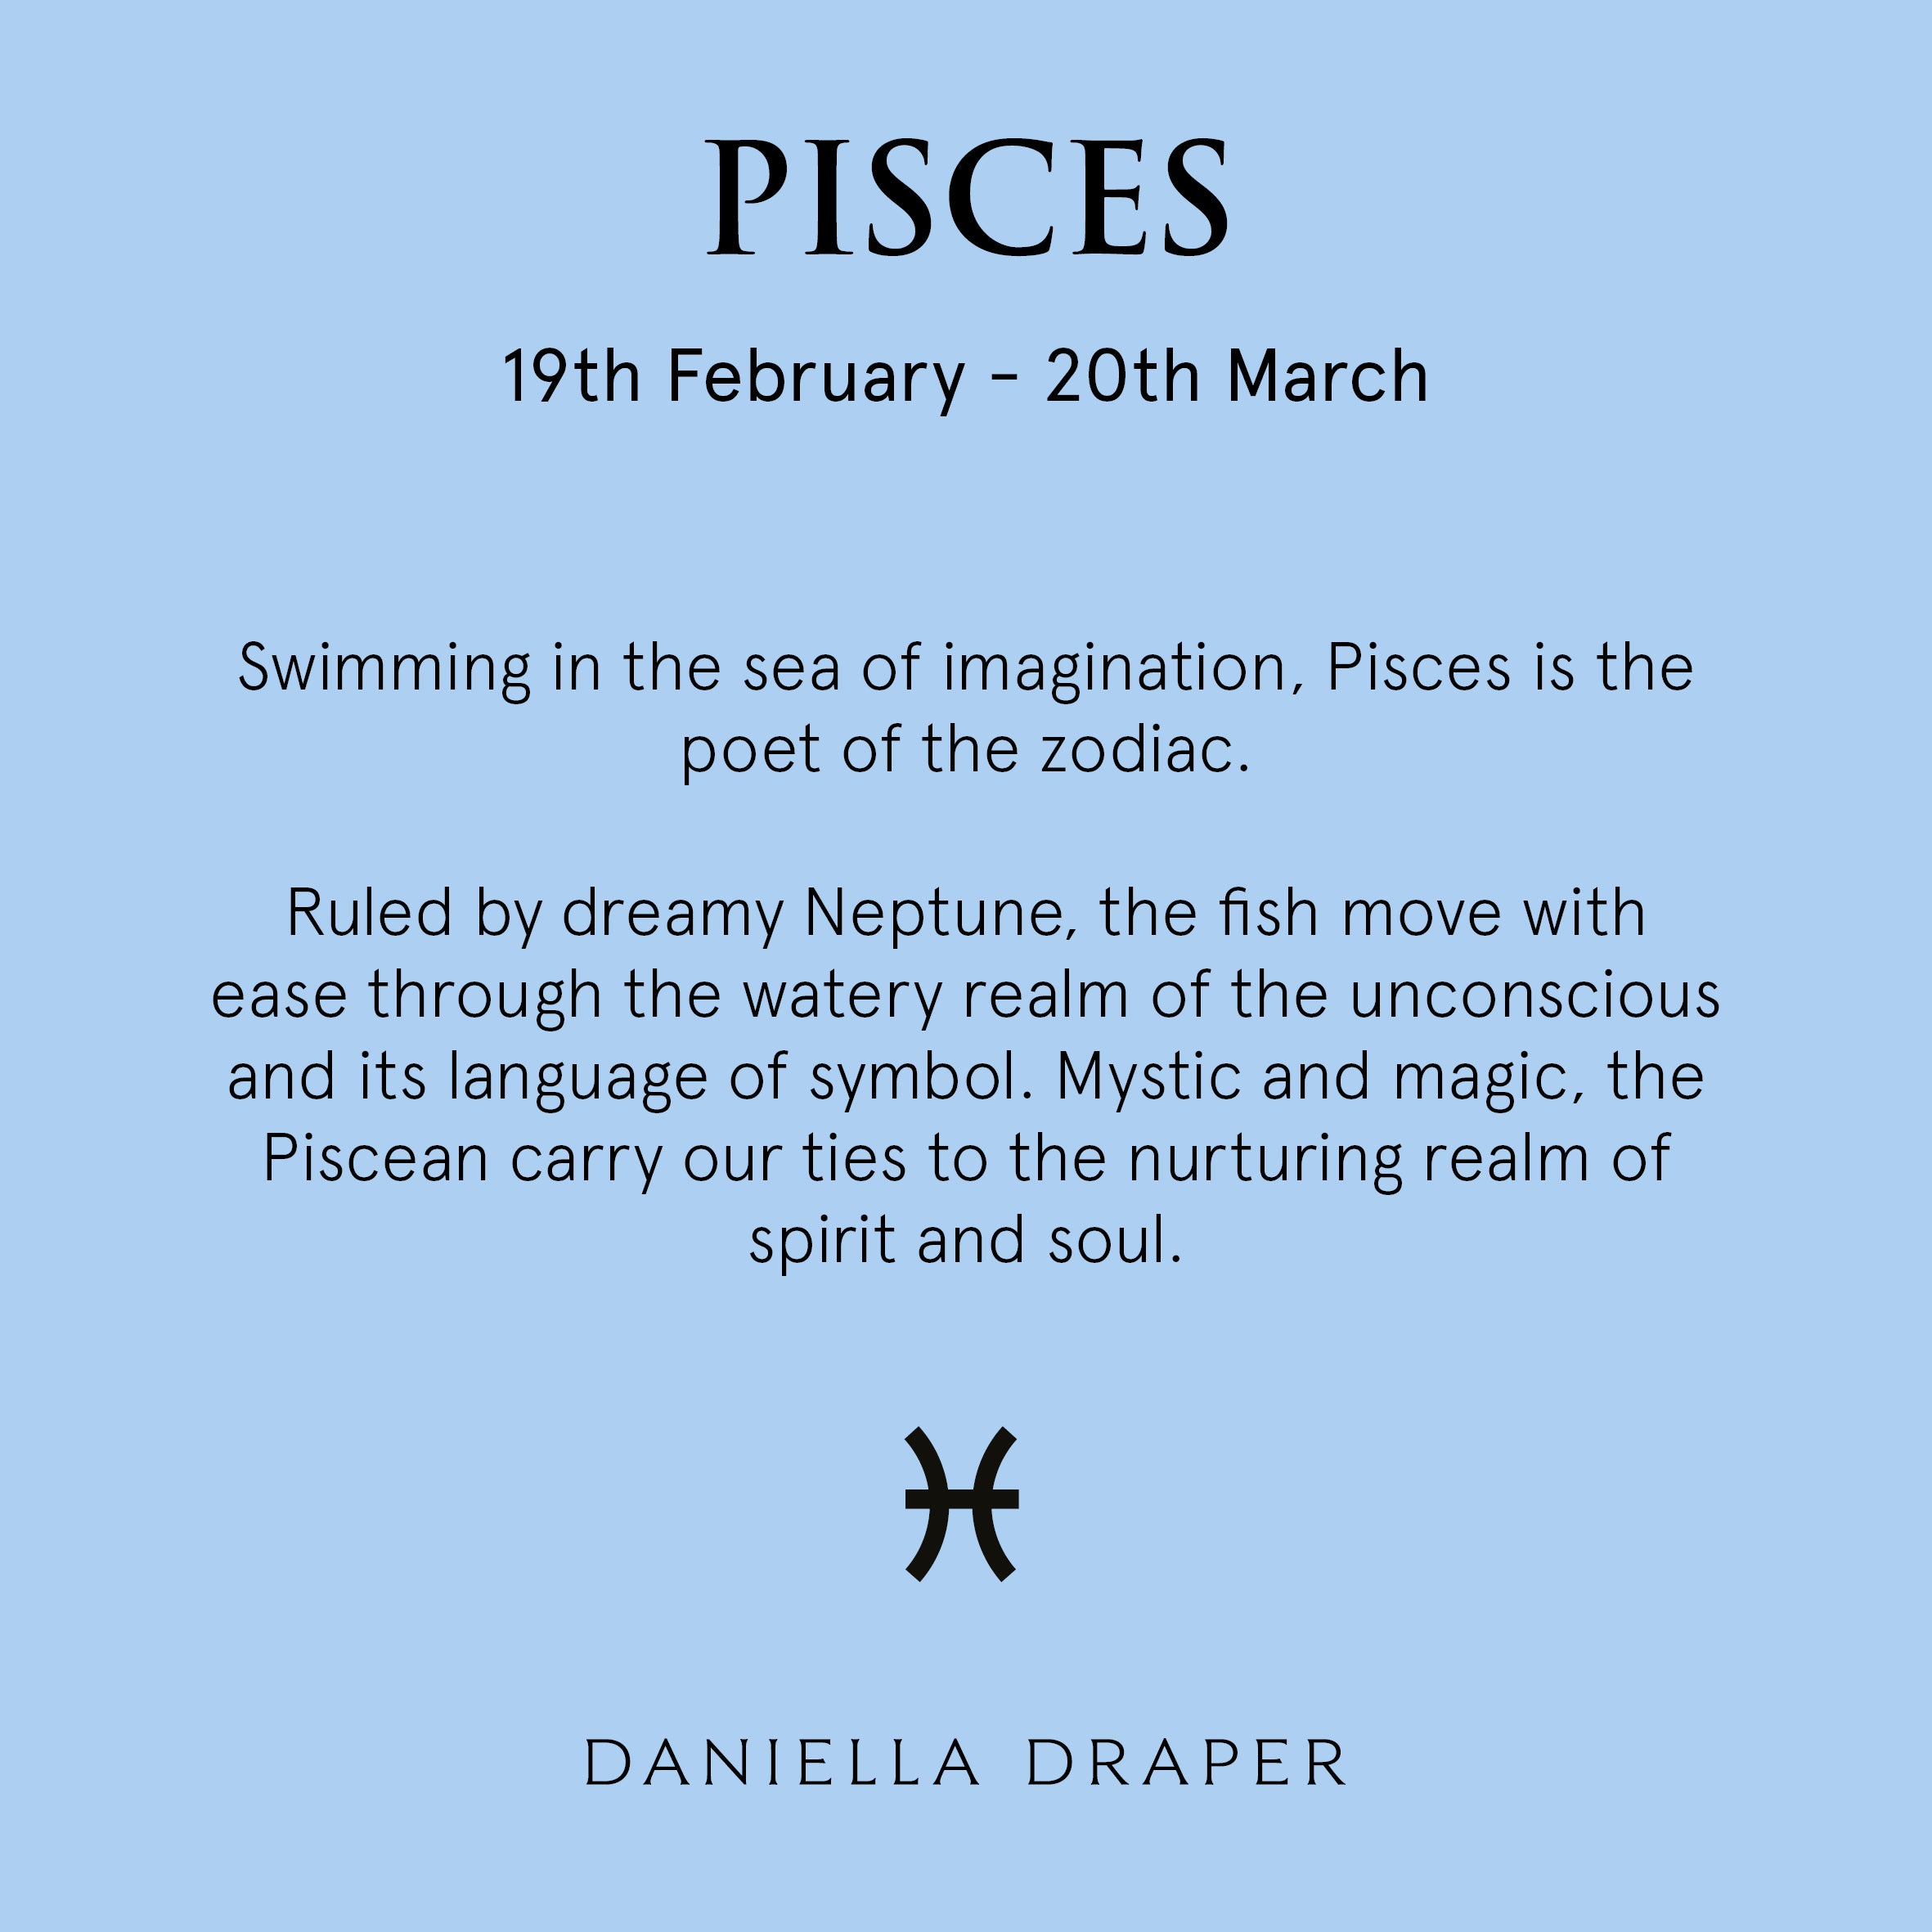 Gold Mini Pisces Horoscope & Aquamarine Birthstone Necklace